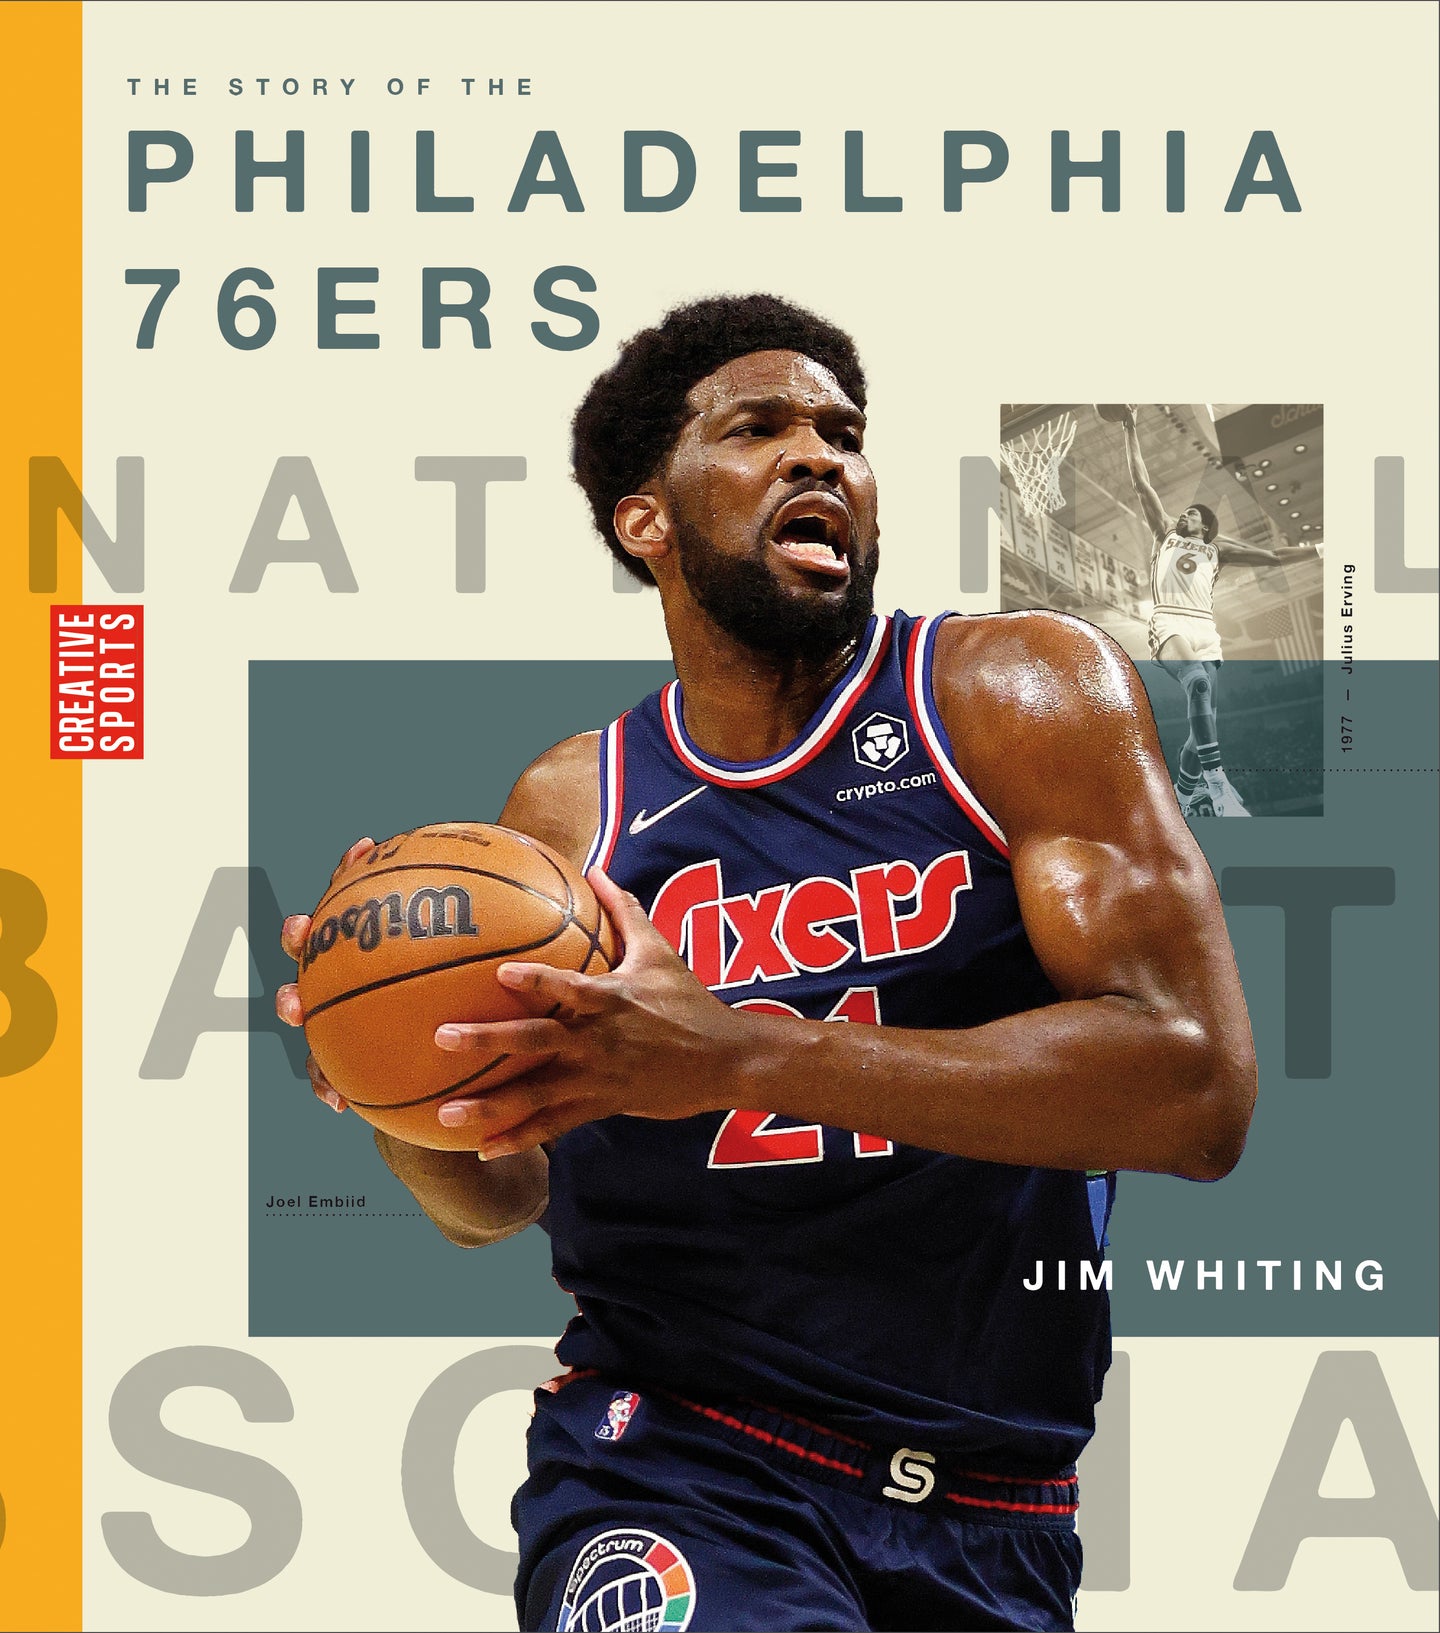 A History of Hoops (2023): Die Geschichte der Philadelphia 76ers